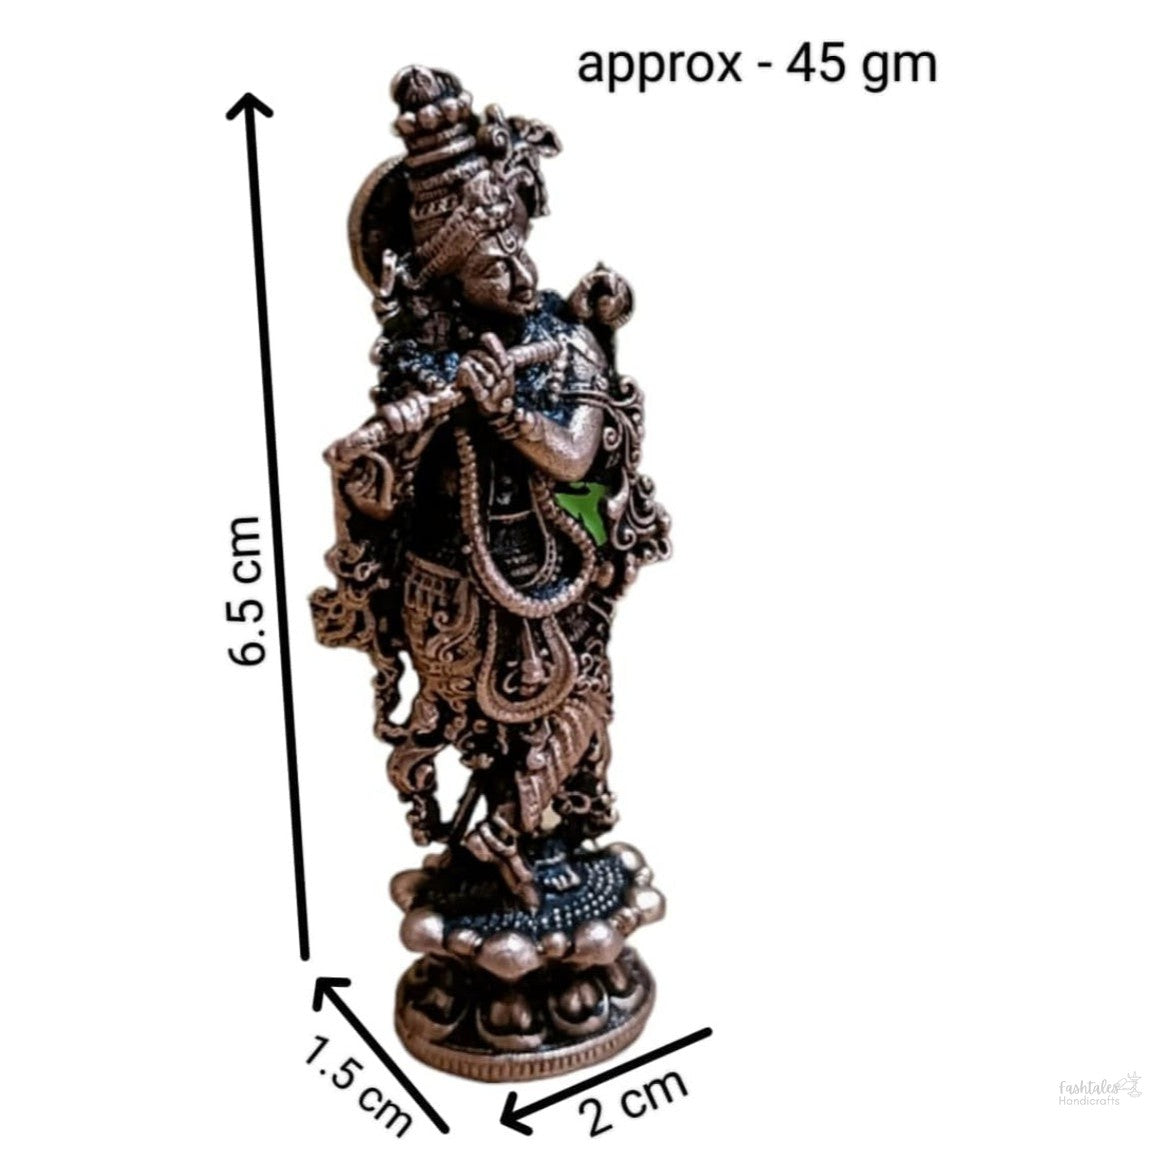 Fashtales Handicrafts Krishna Idol Height 6.5 Cm, Weight 45 GMS, Patina Antique Finish, Pack of 1 Piece